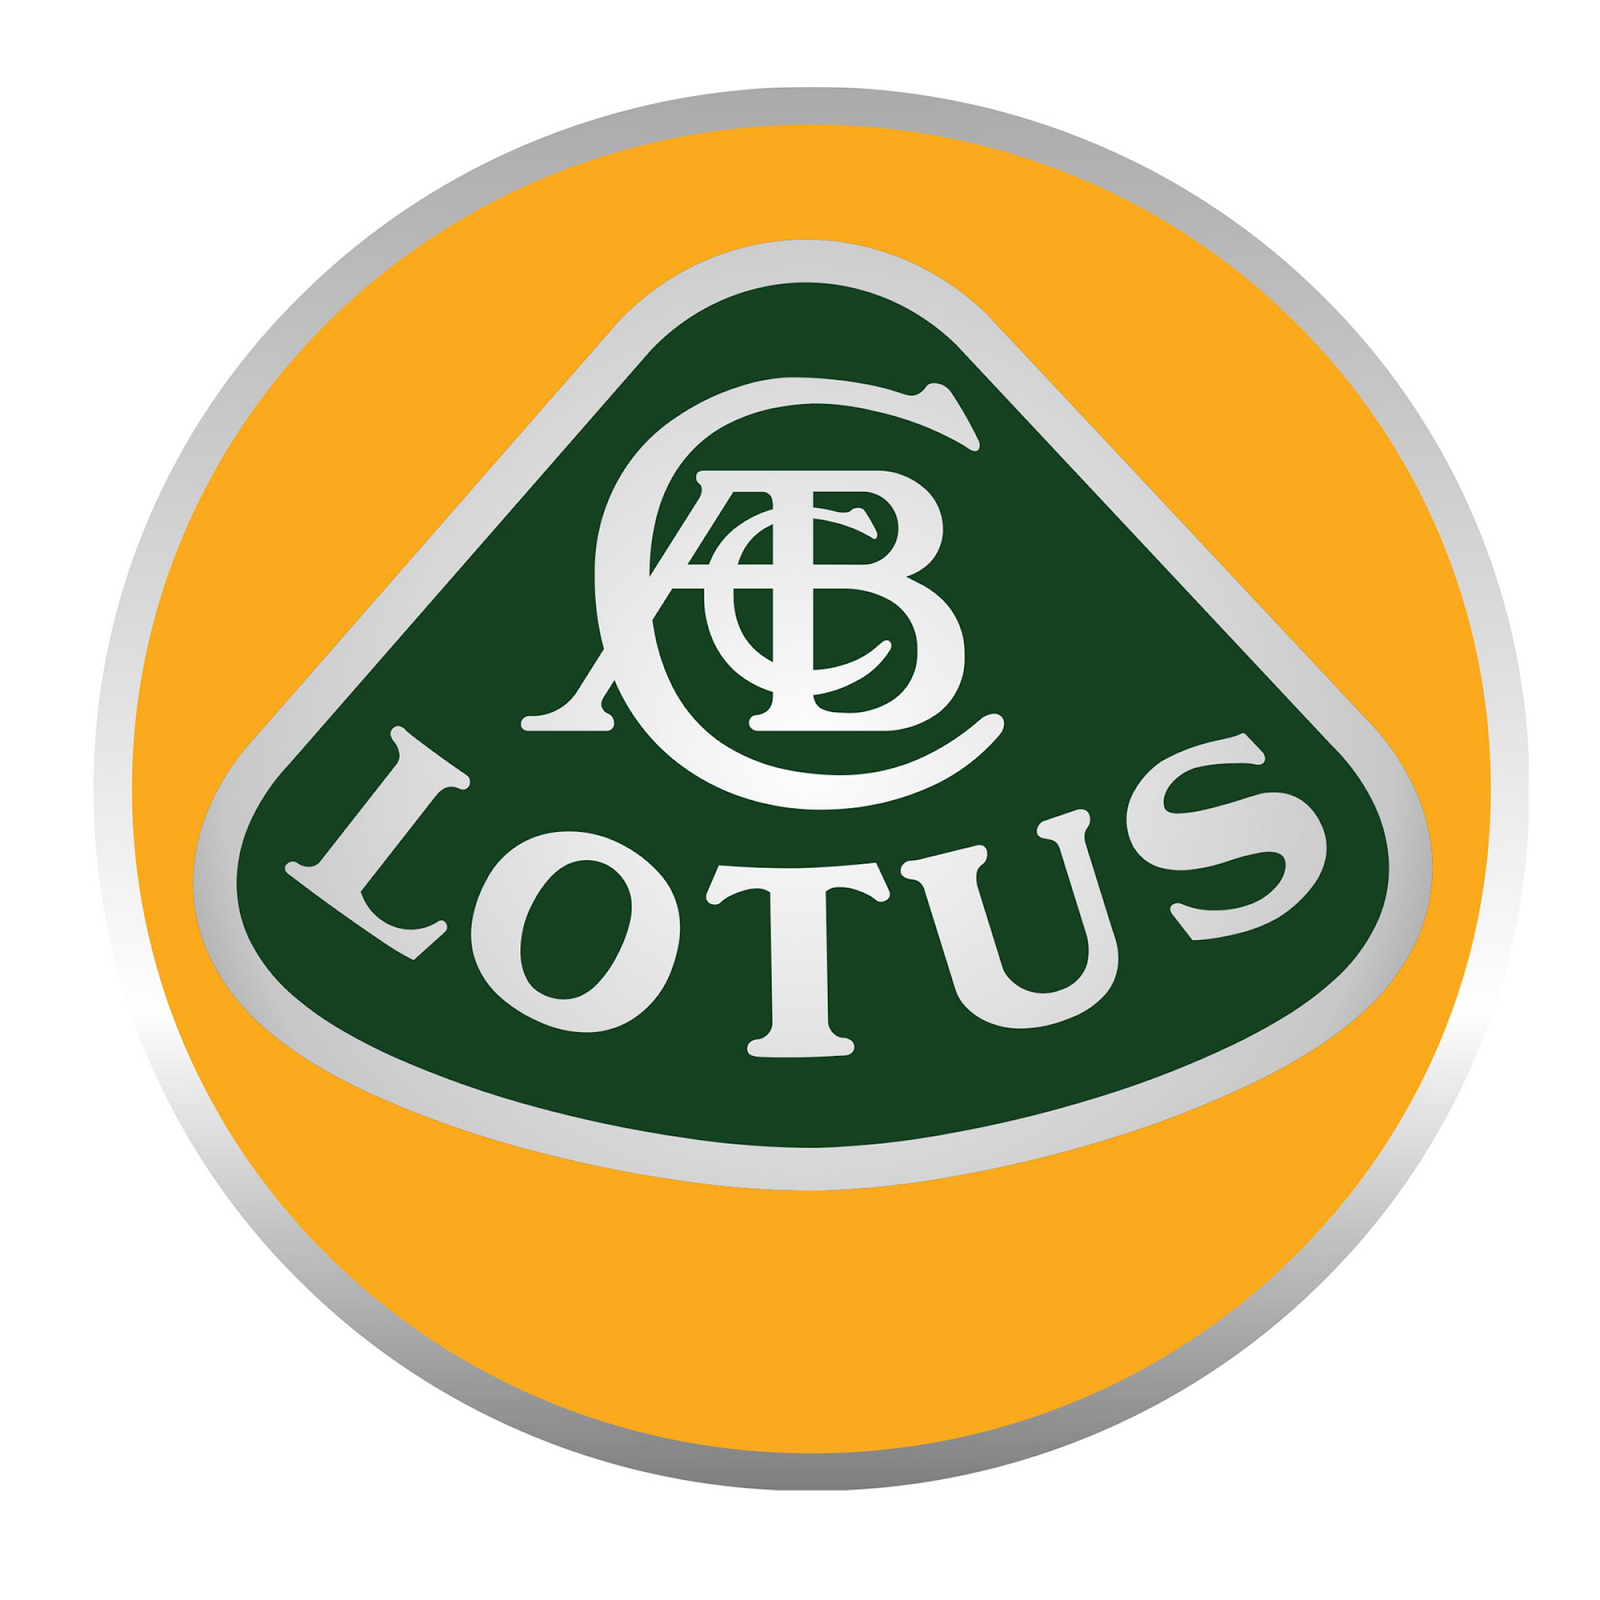 British Manufacturer Of Luxury Sports Cars Logo httpsgoogledrive